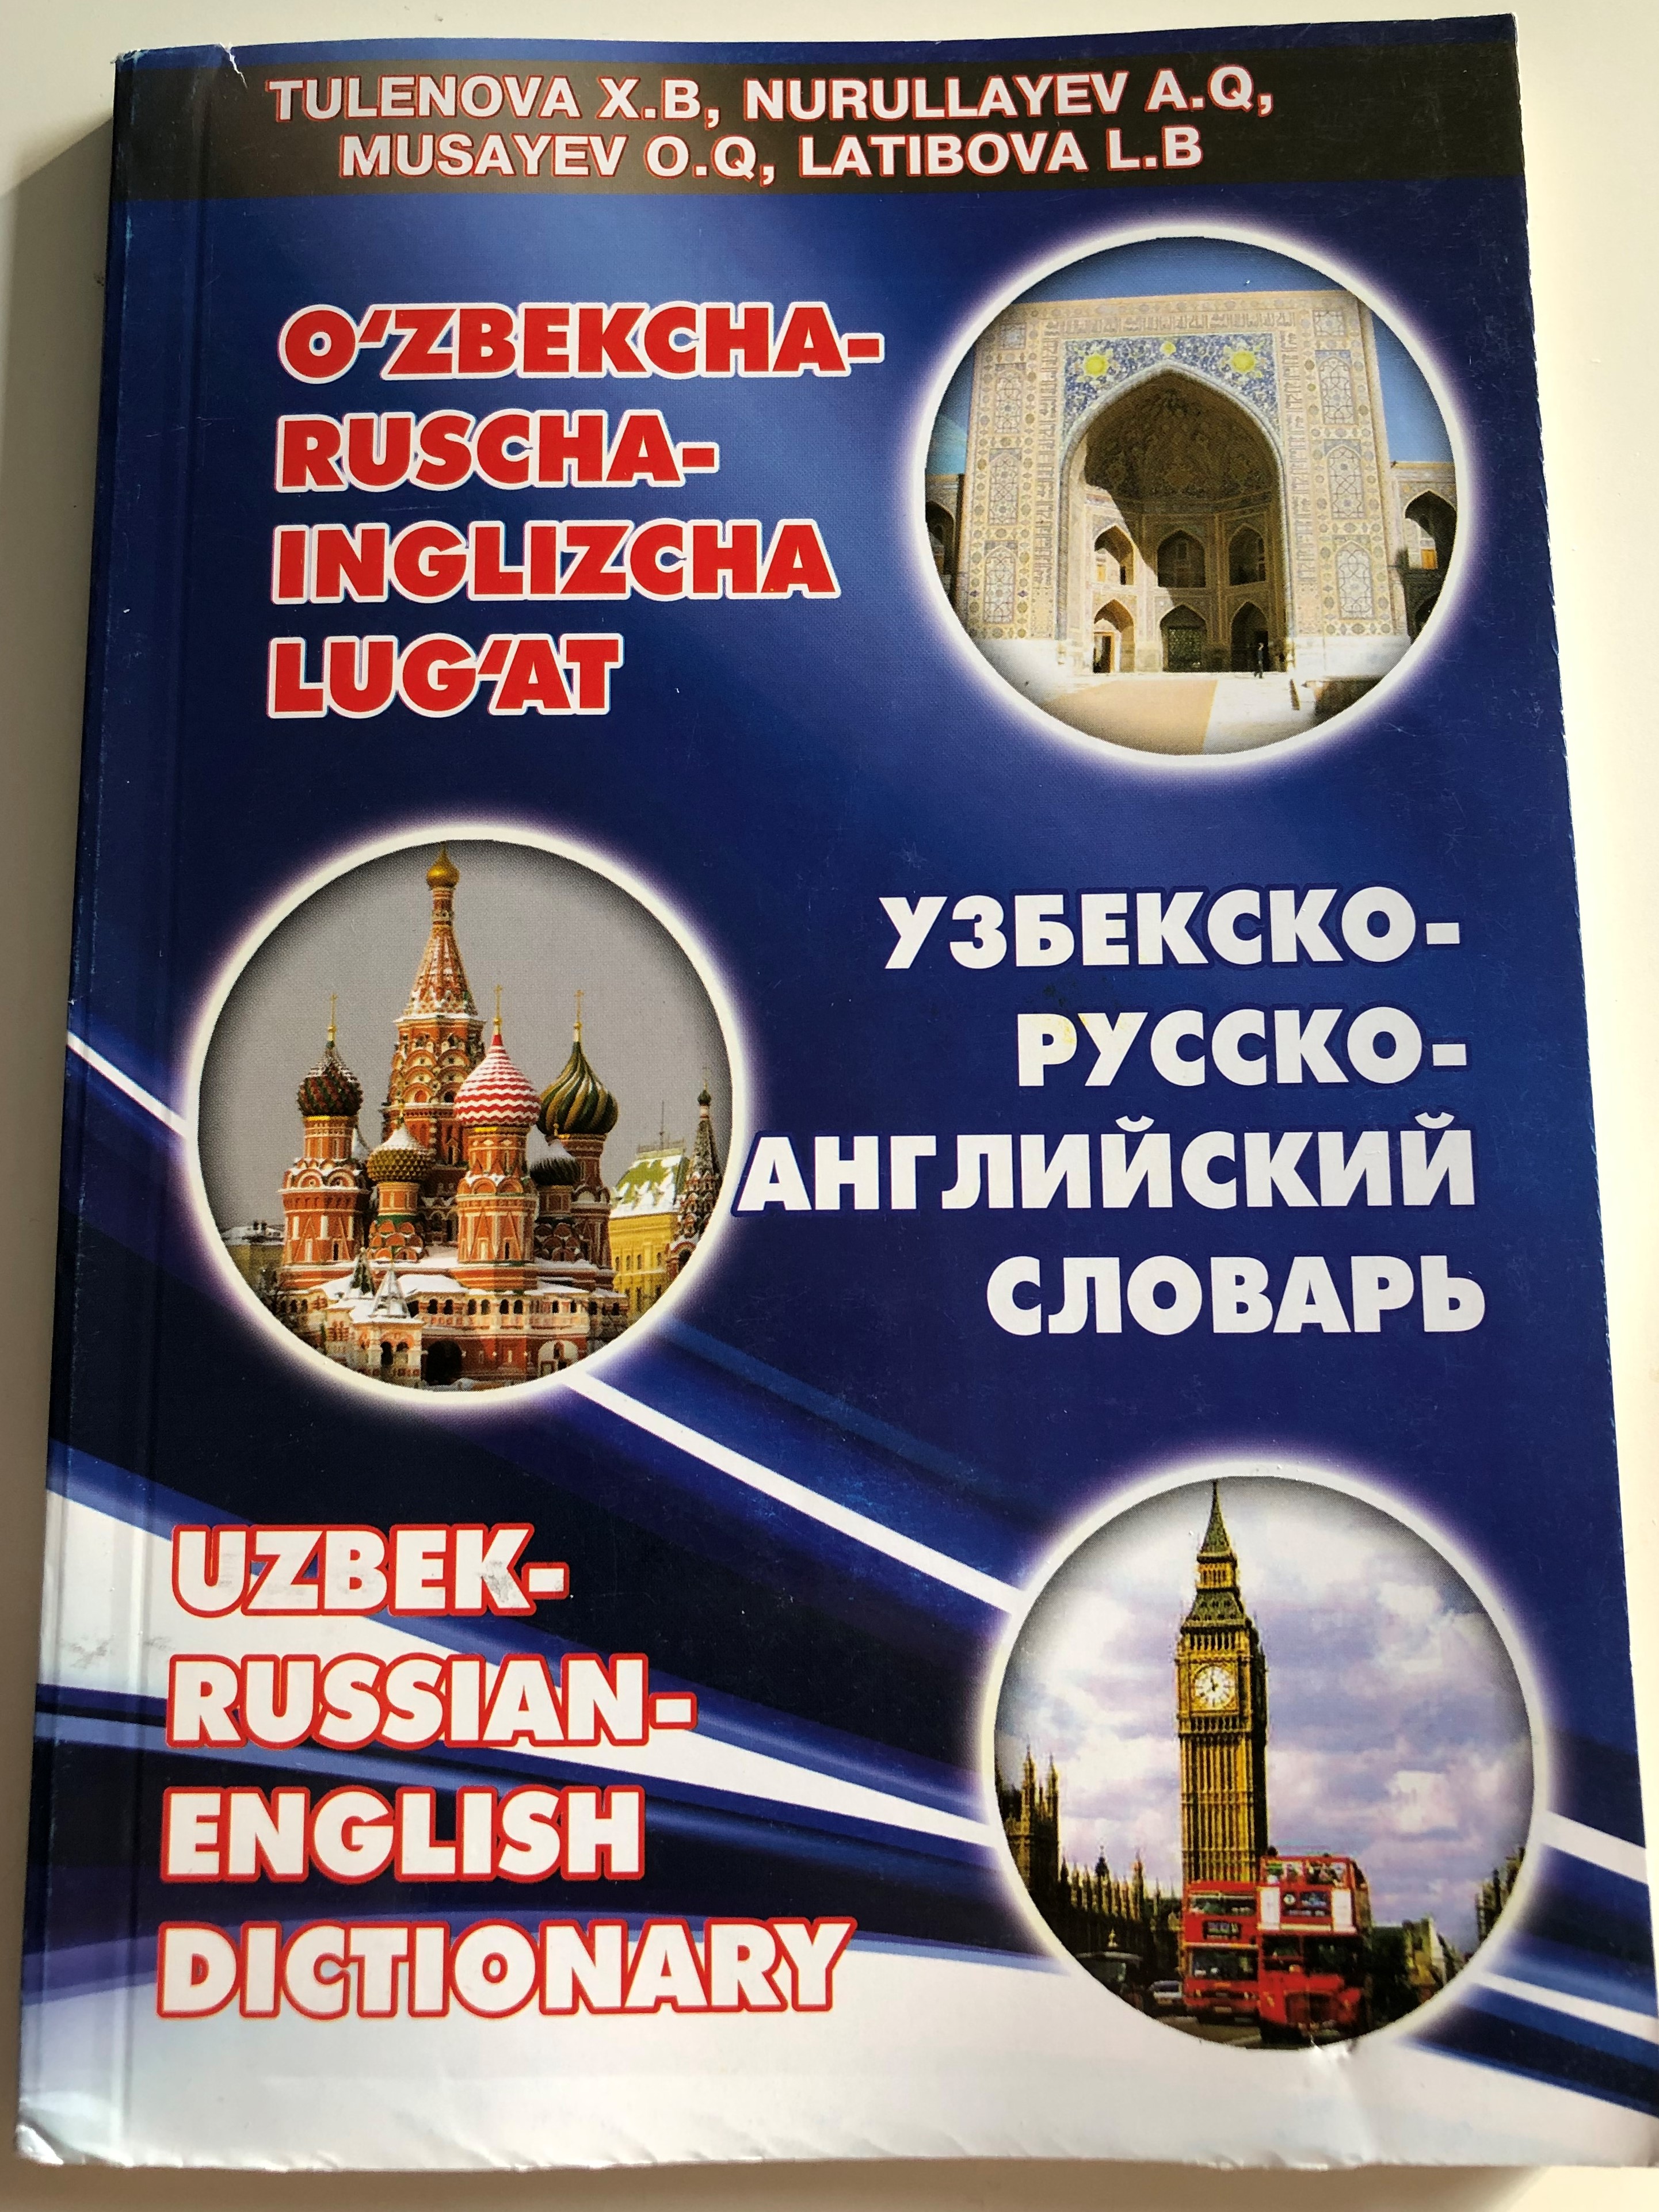 uzbek-russian-english-dictionary-by-tulenova-x.b-nurullayev-a.q-musayev-o.q-latibova-l.b-o-zbekcha-ruscha-inglizcha-lug-at-dizayn-press-2011-1-.jpg